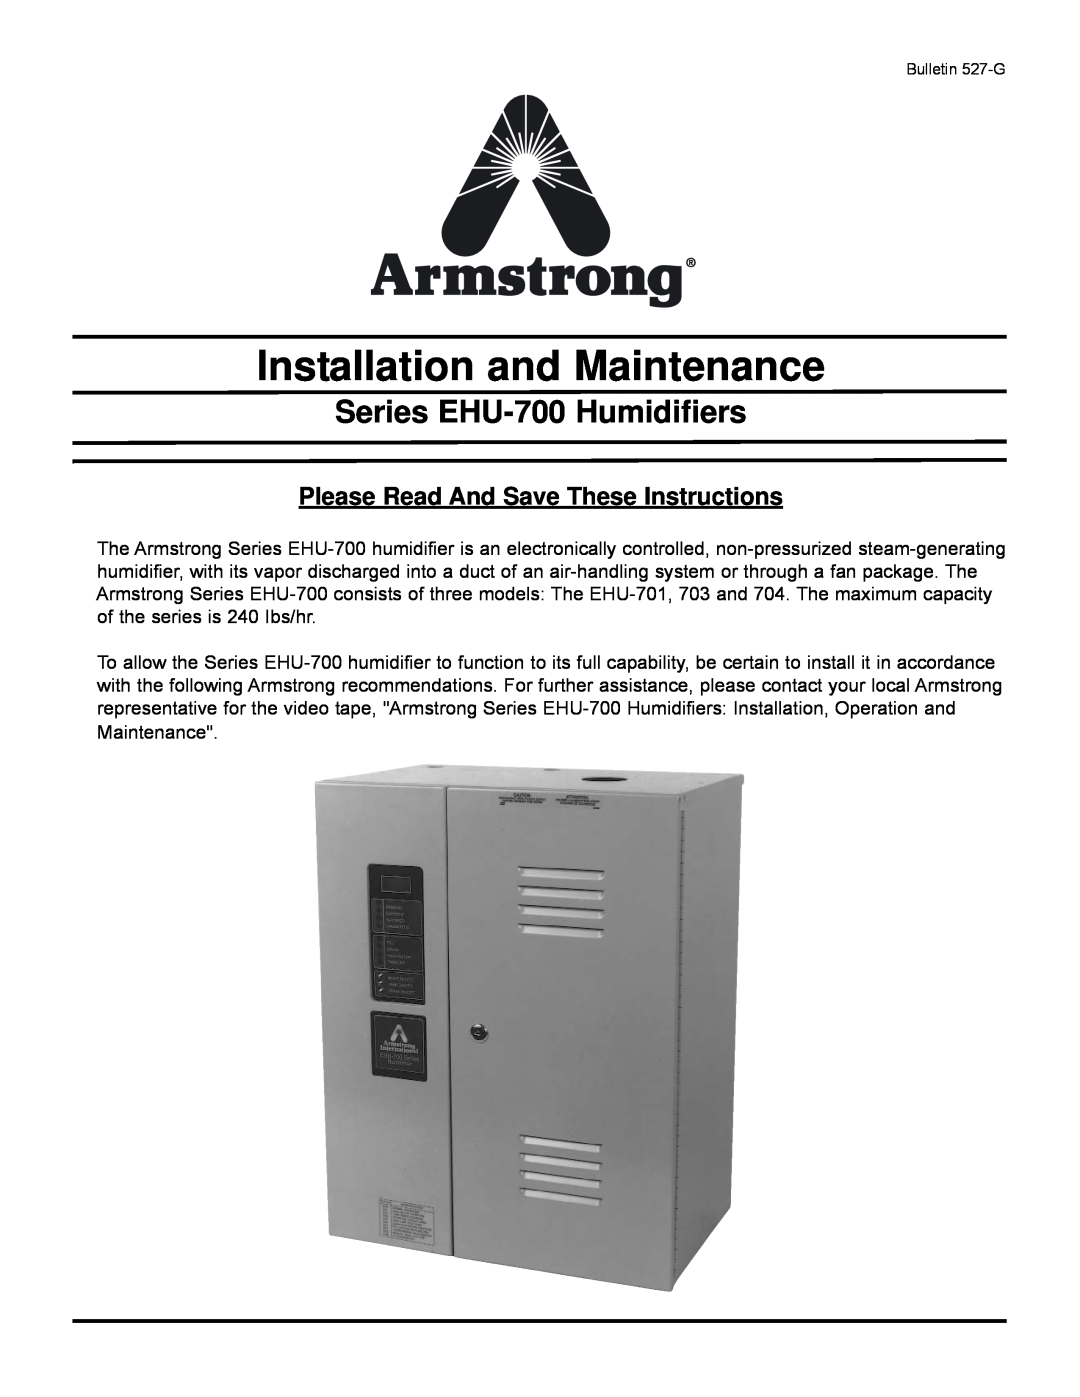 Armstrong World Industries EHU-703, EHU-700 Series, EHU-701 manual Installation and Maintenance, Series EHU-700 Humidifiers 